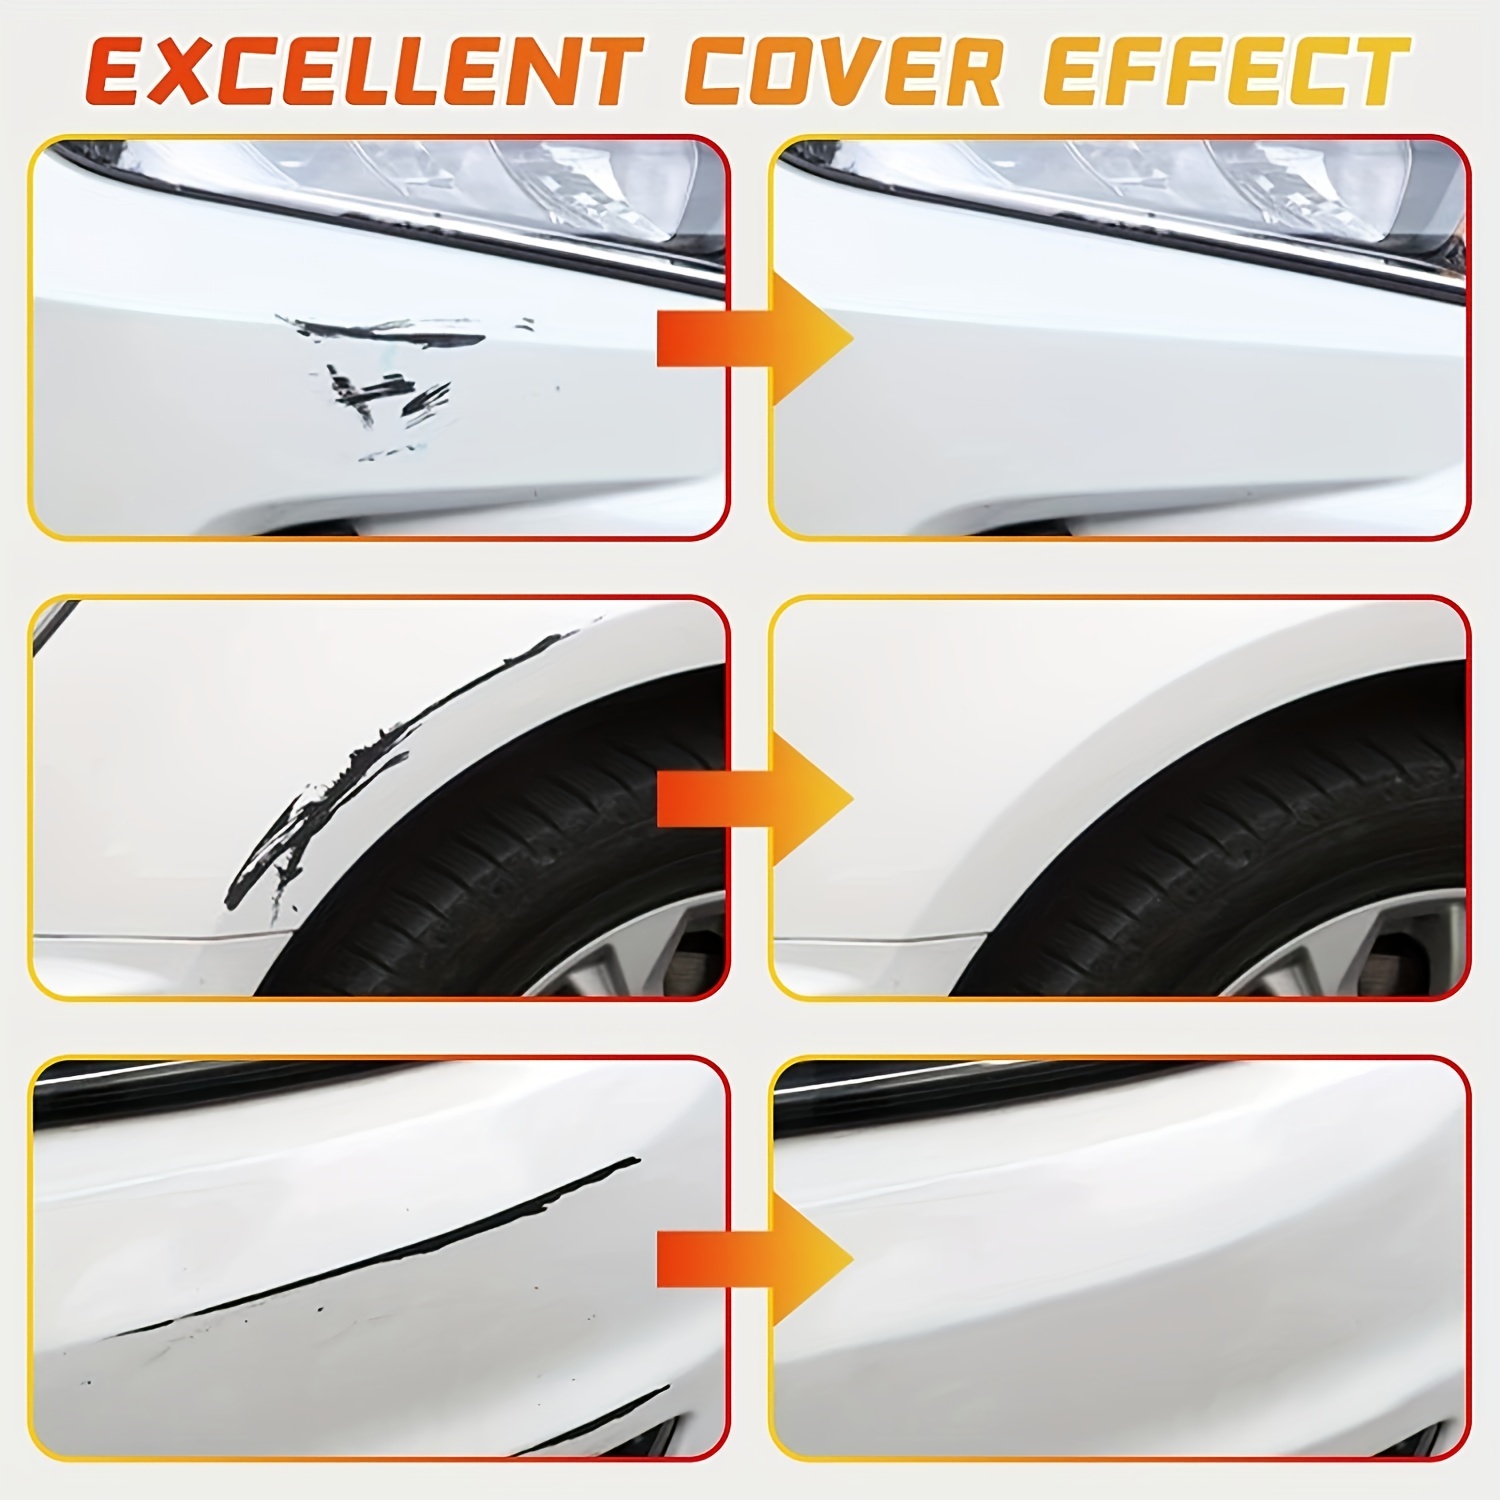 Automotive Paint Pen and Car Paint Touch-Up Products